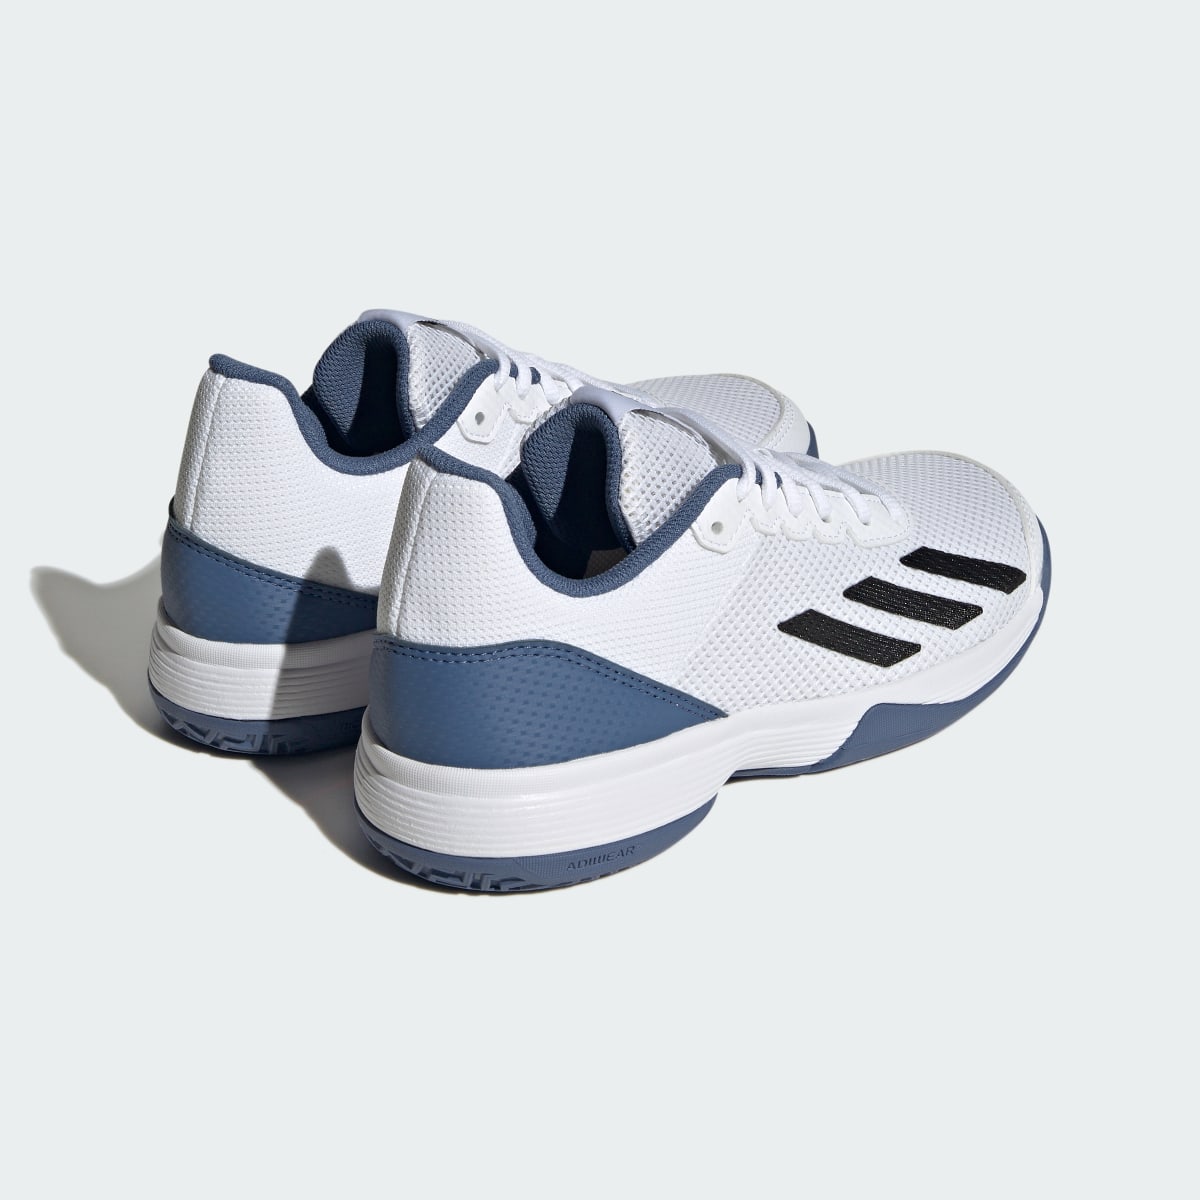 Adidas Courtflash Tennis Shoes. 6